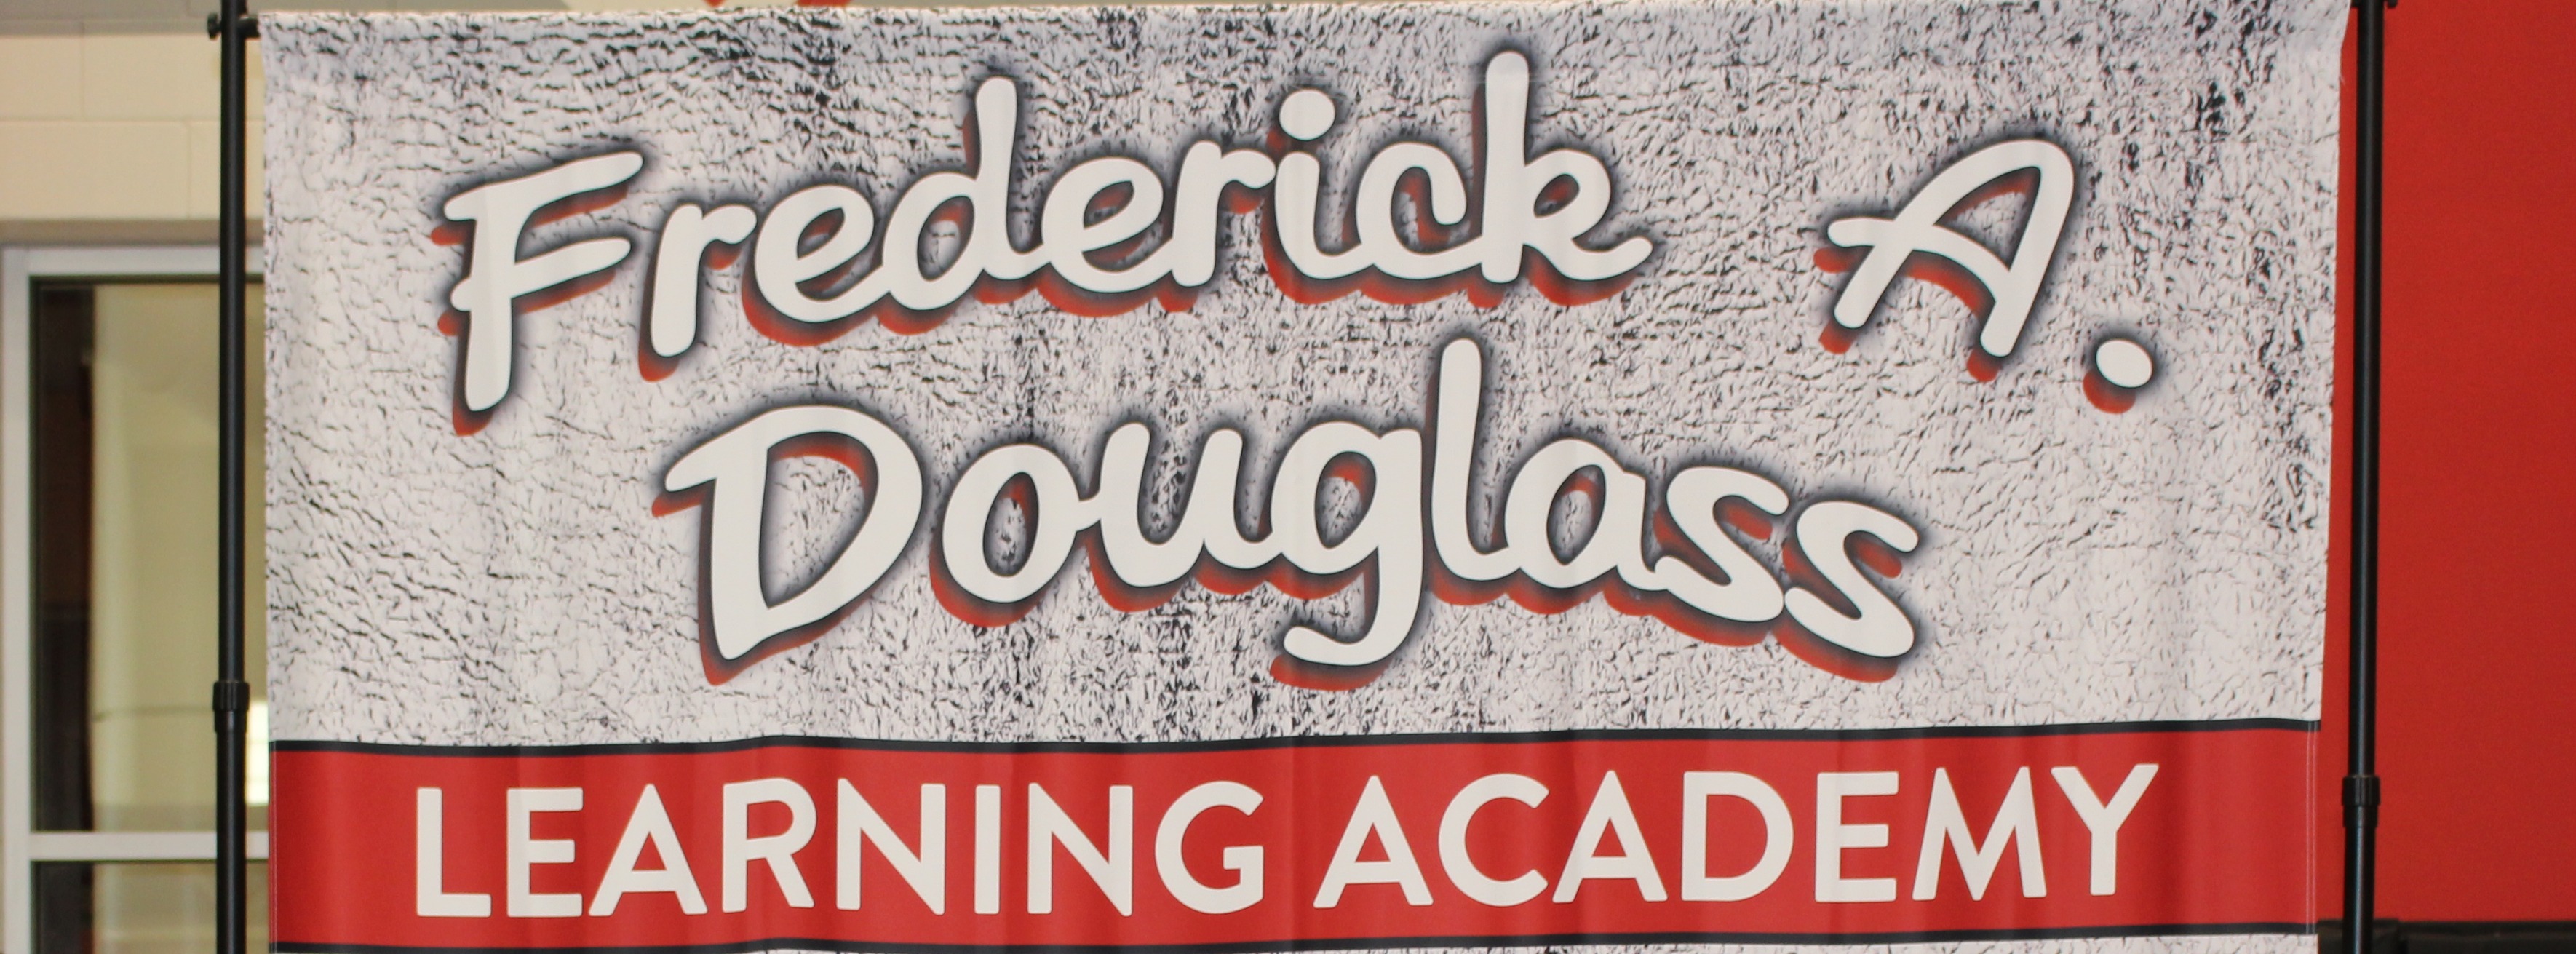 Douglass Learning Academy graduation backdrop